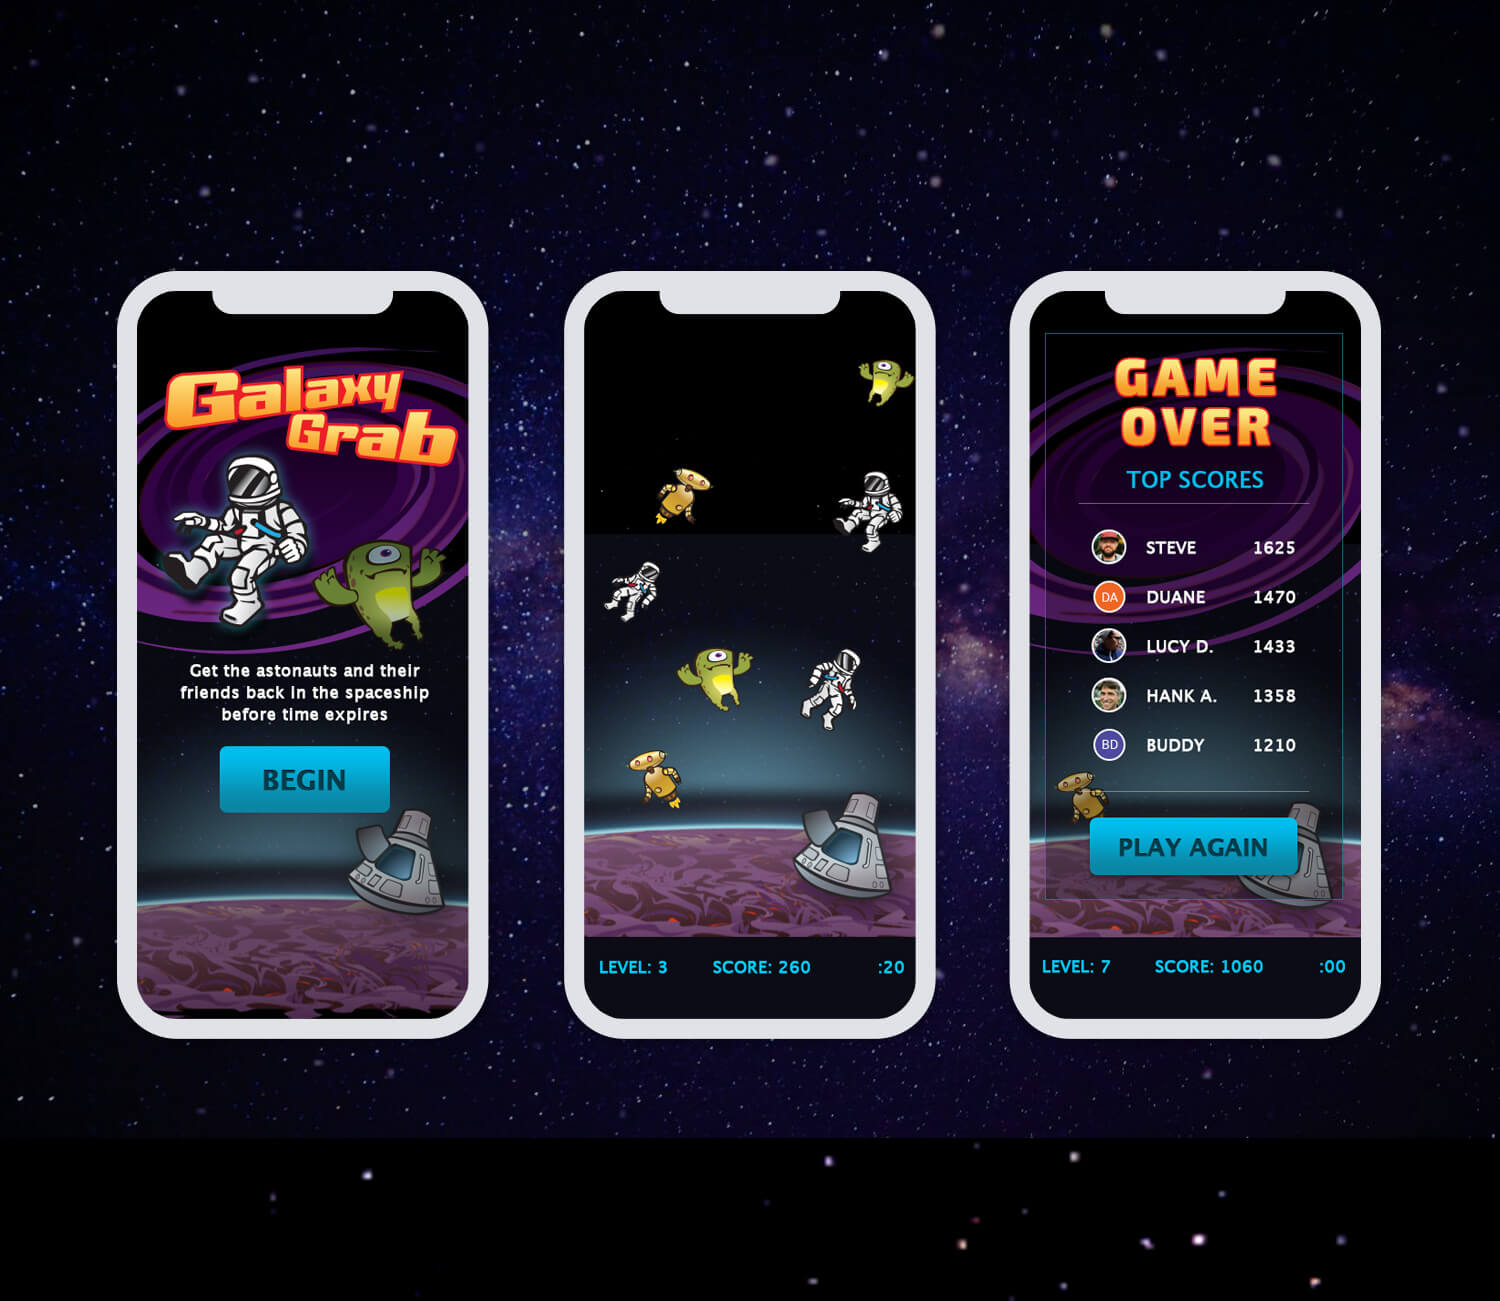 Galaxy Grab Mobile Application Game Screens